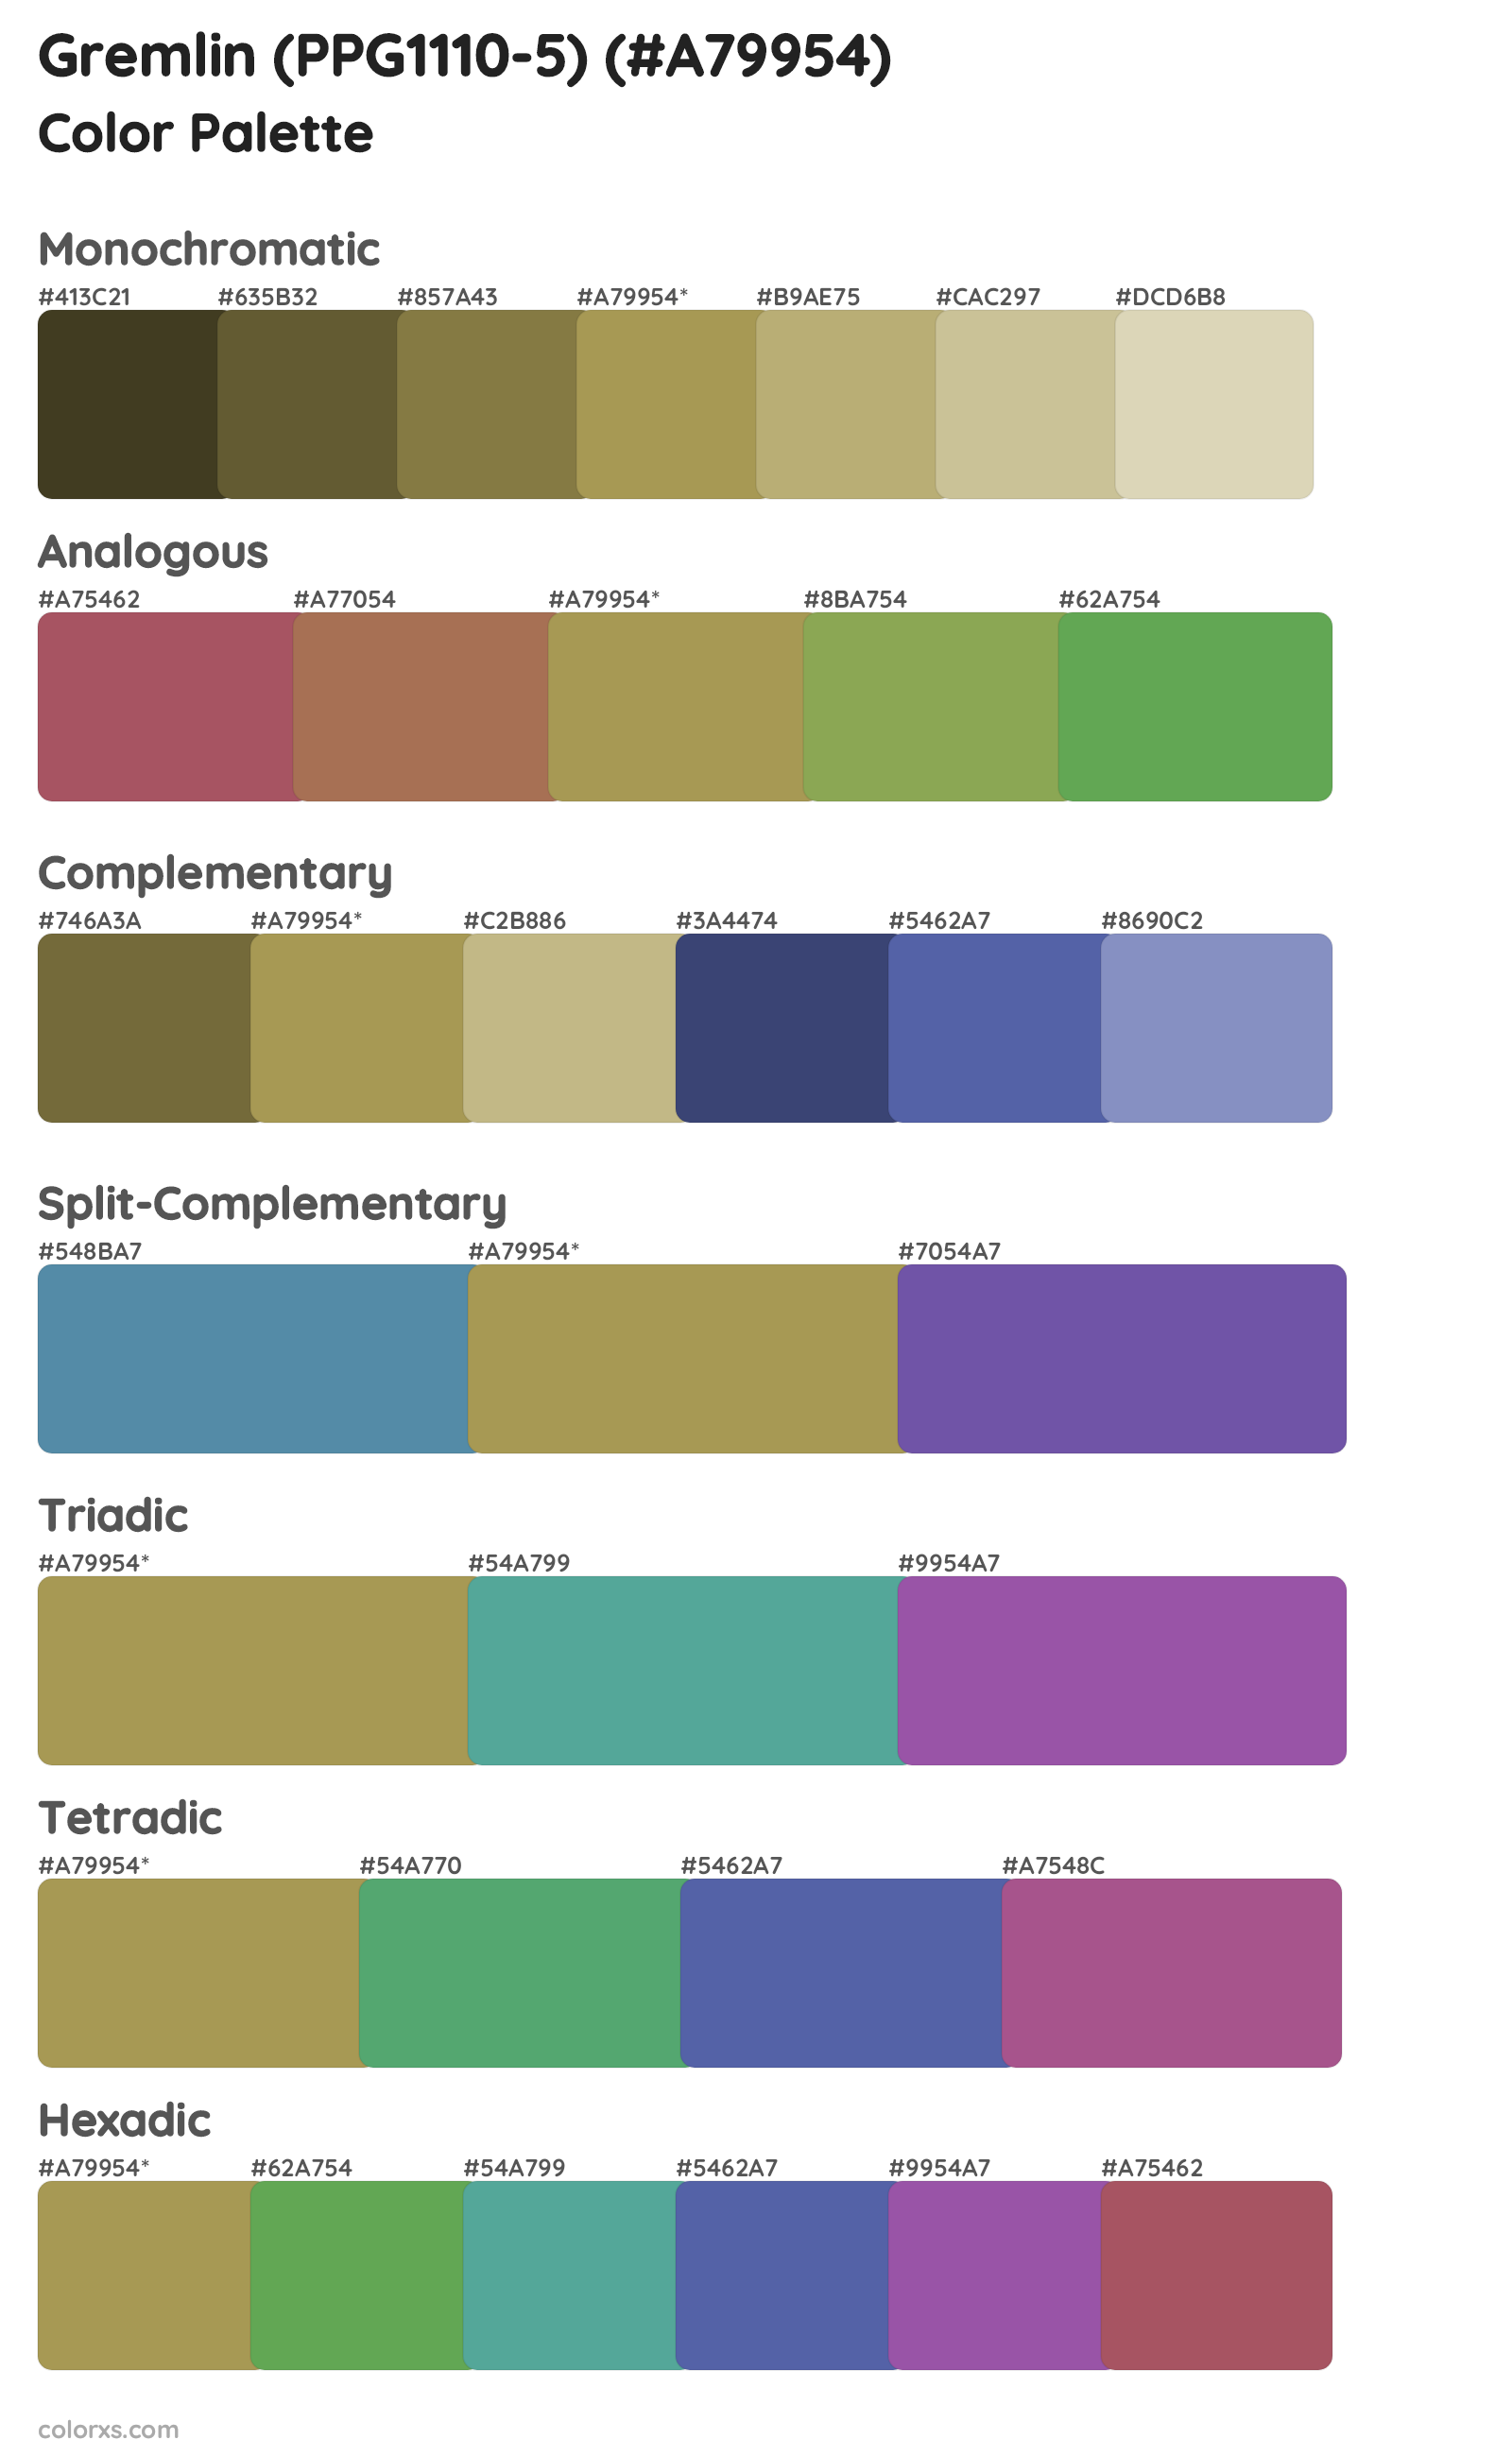 Gremlin (PPG1110-5) Color Scheme Palettes